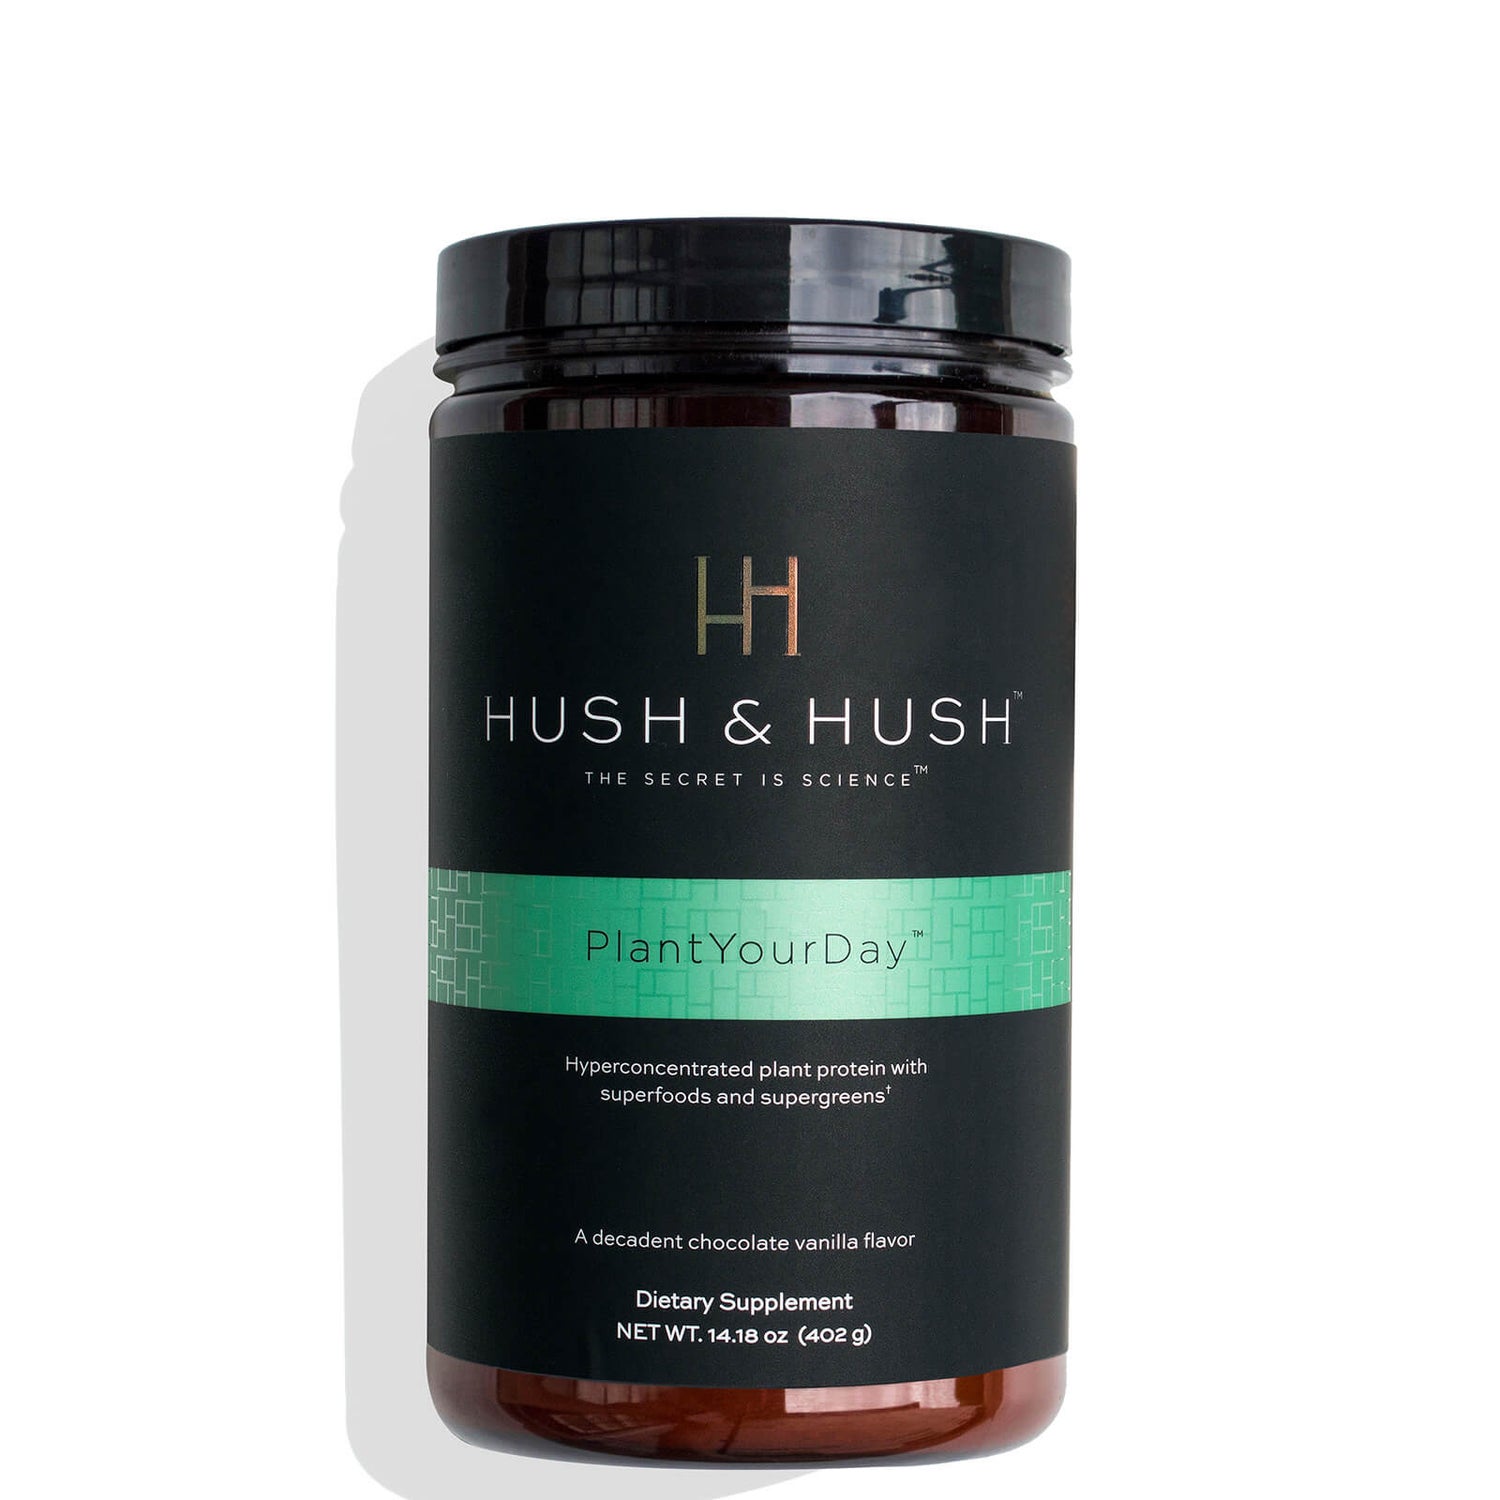 Hush & Hush Plant Your Day Energy Supplement 14.18 oz